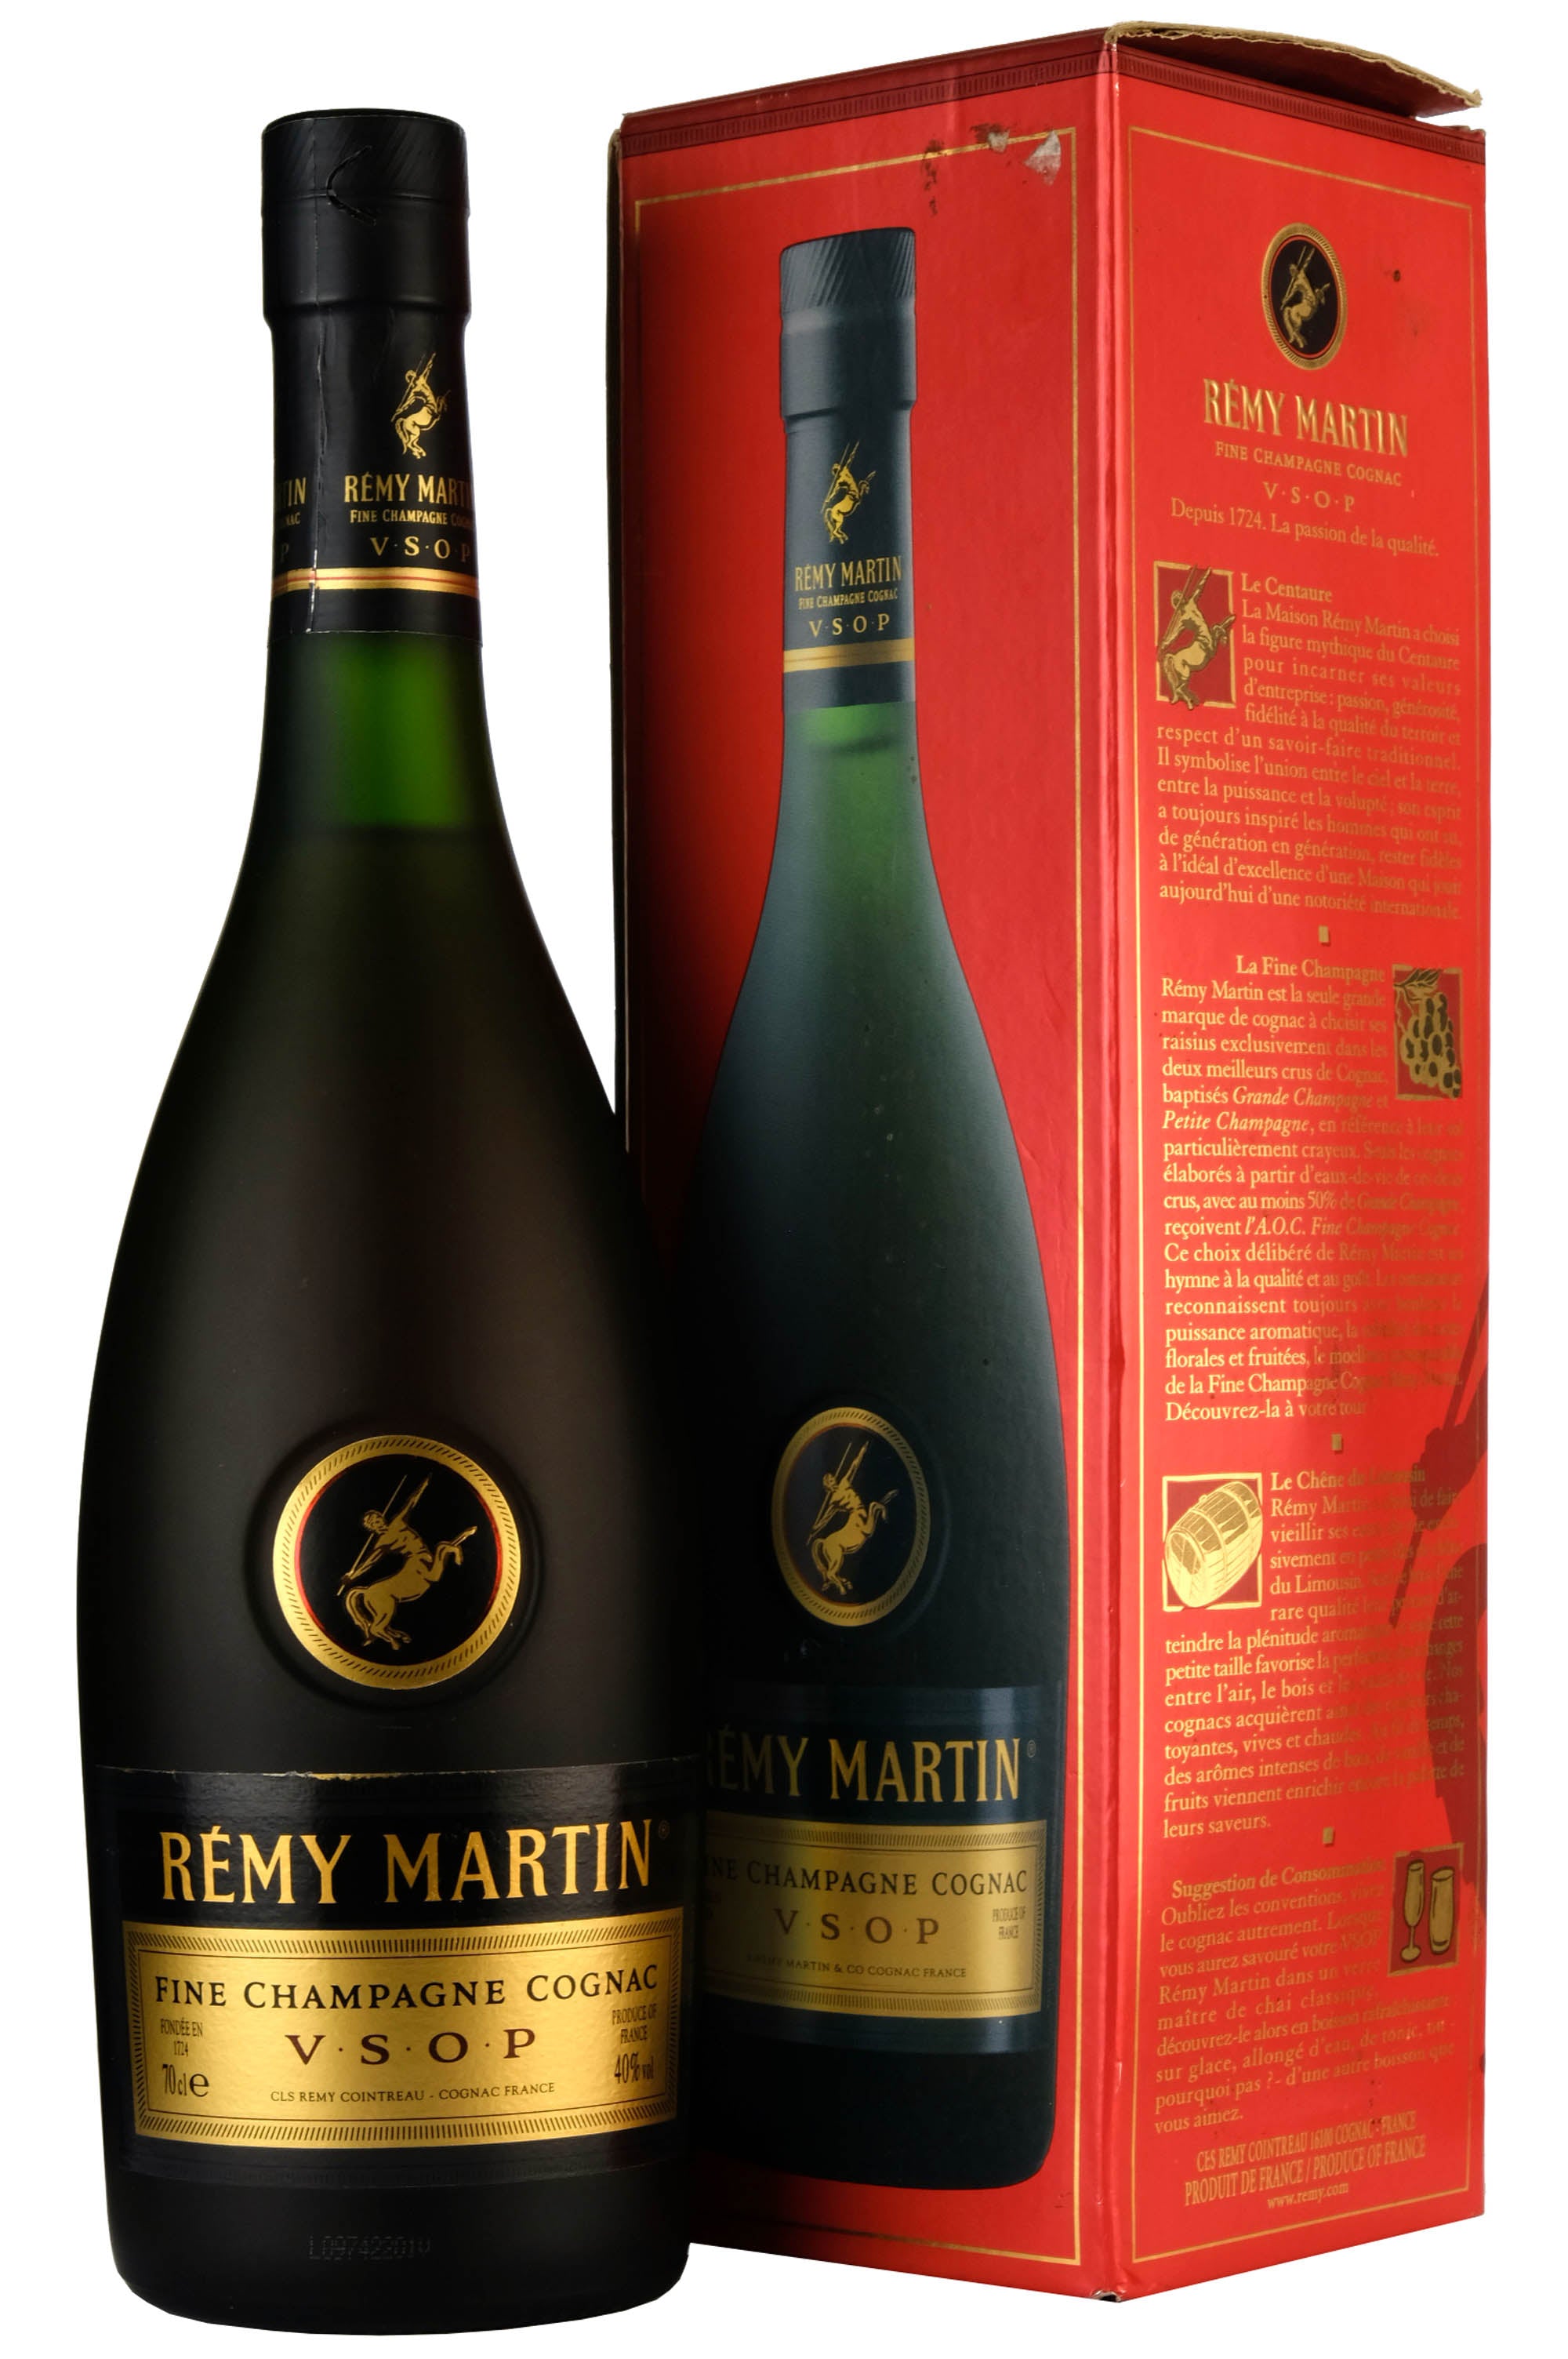 Remy Martin VSOP Champagne Cognac | Pre-2005 Bottle